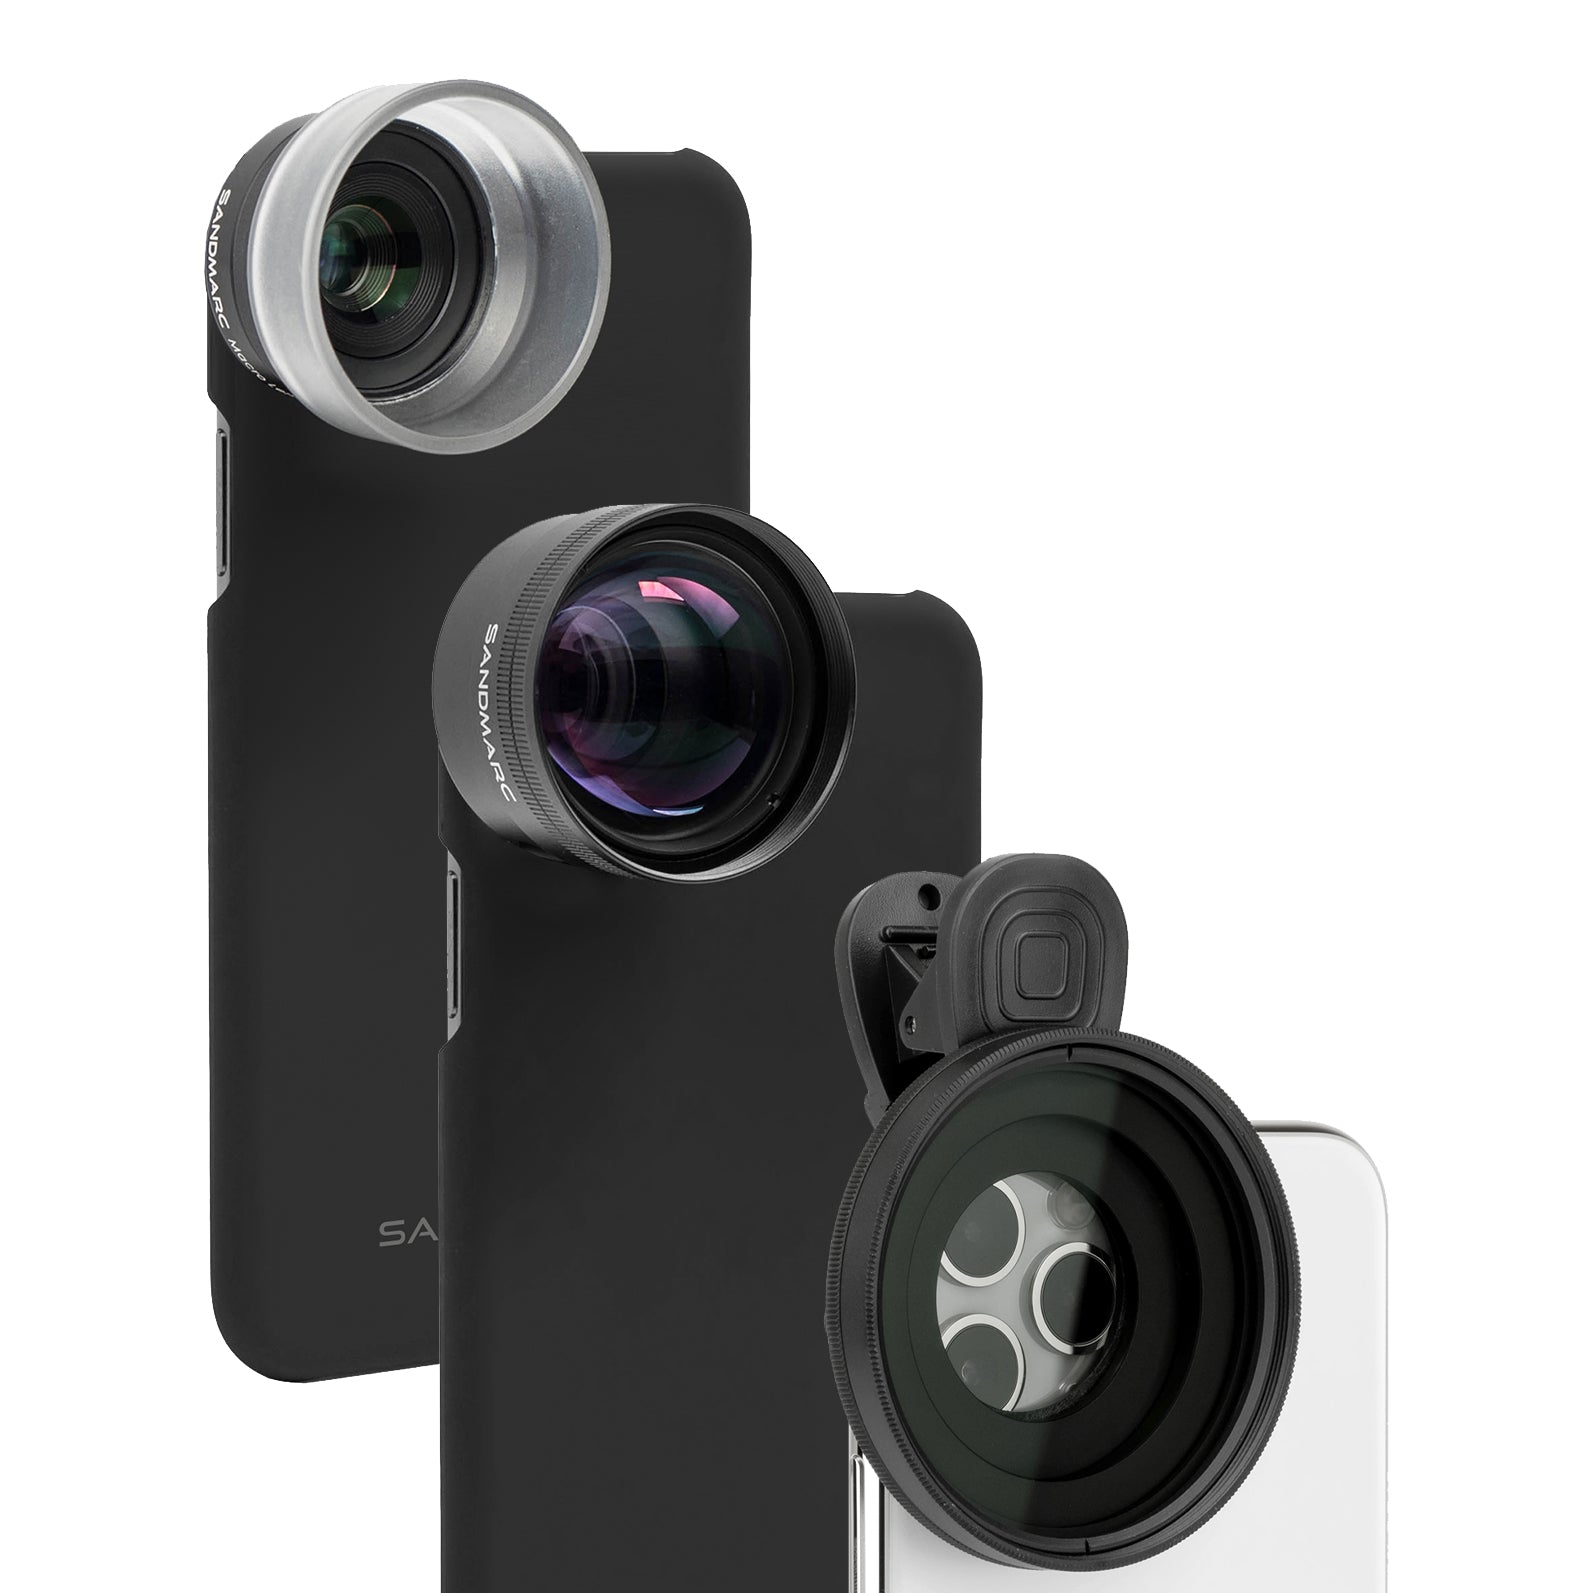 iPhone 12 Pro Max Lens Kit - Photography Edition - SANDMARC